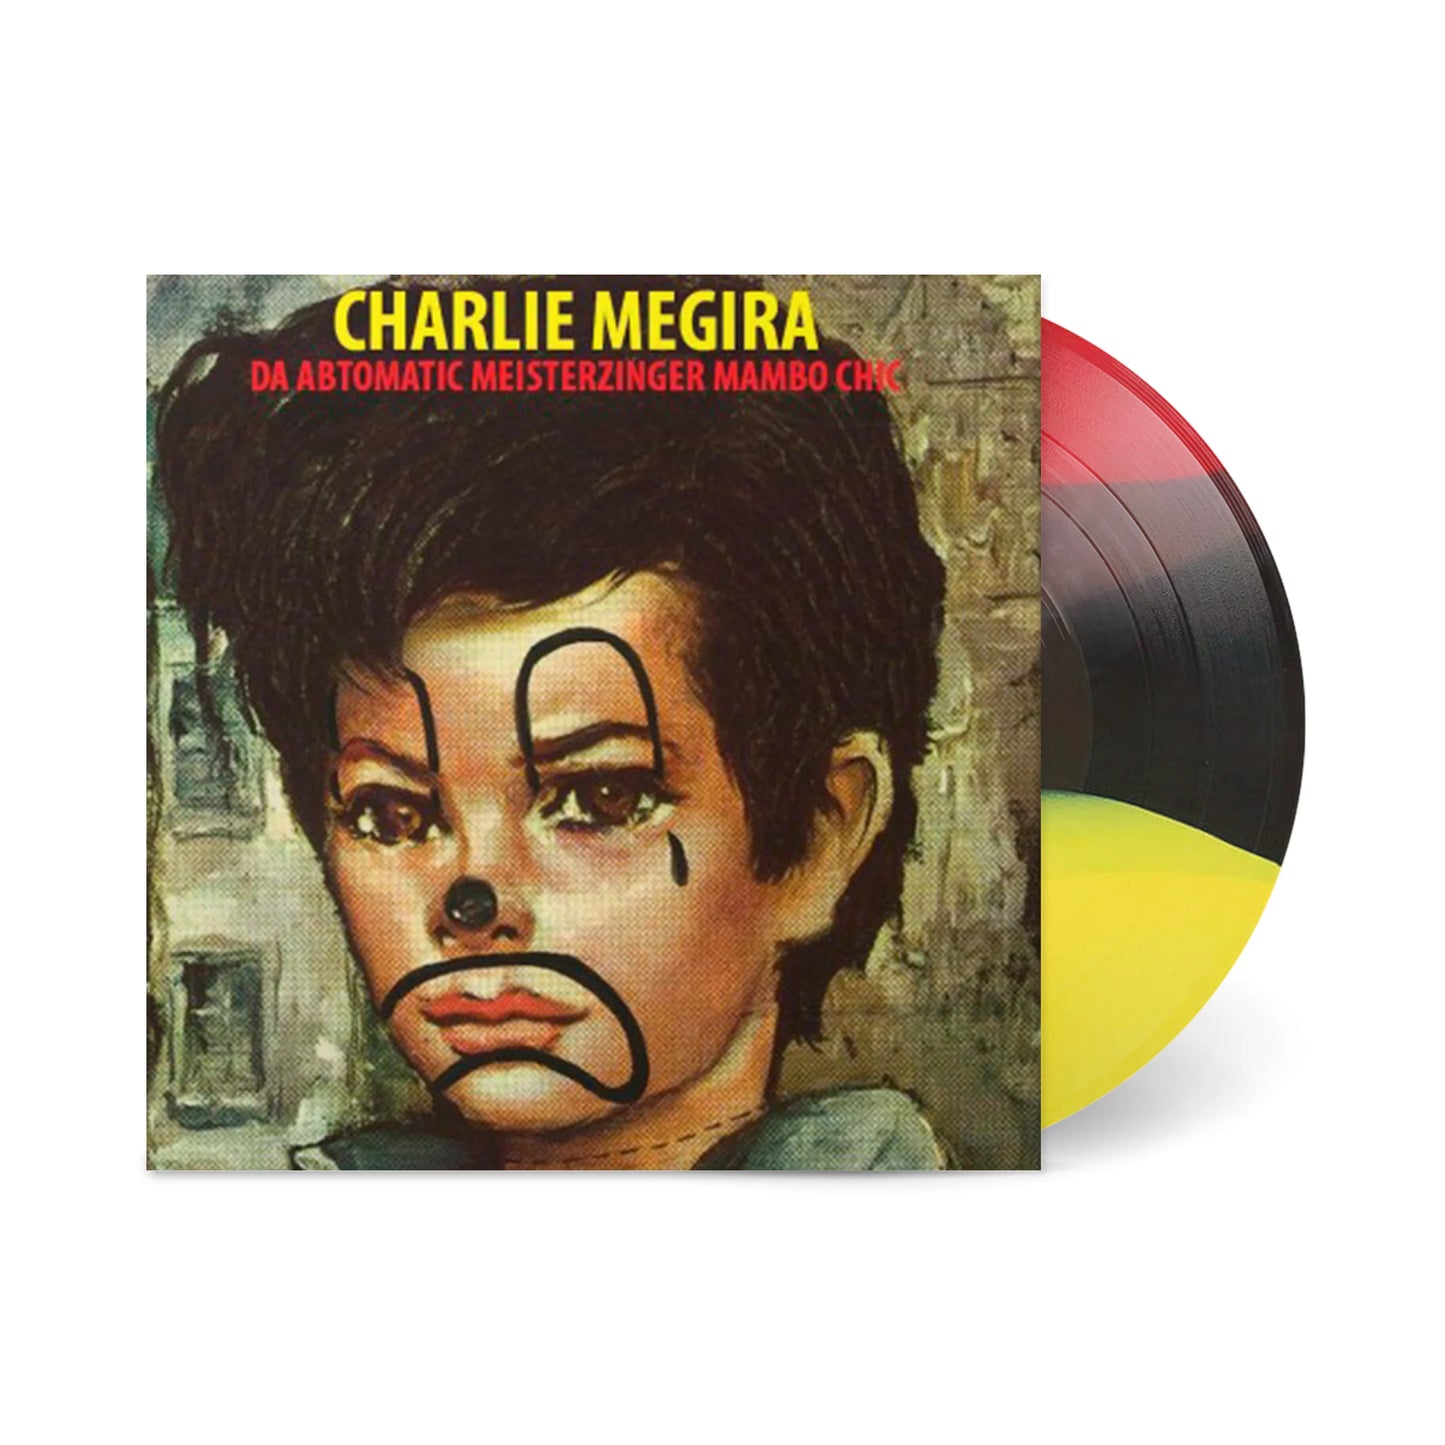 Charlie Megira "Da Abtomatic Meisterzinger Mambo Chic" LP (Mambo Tri-Color)